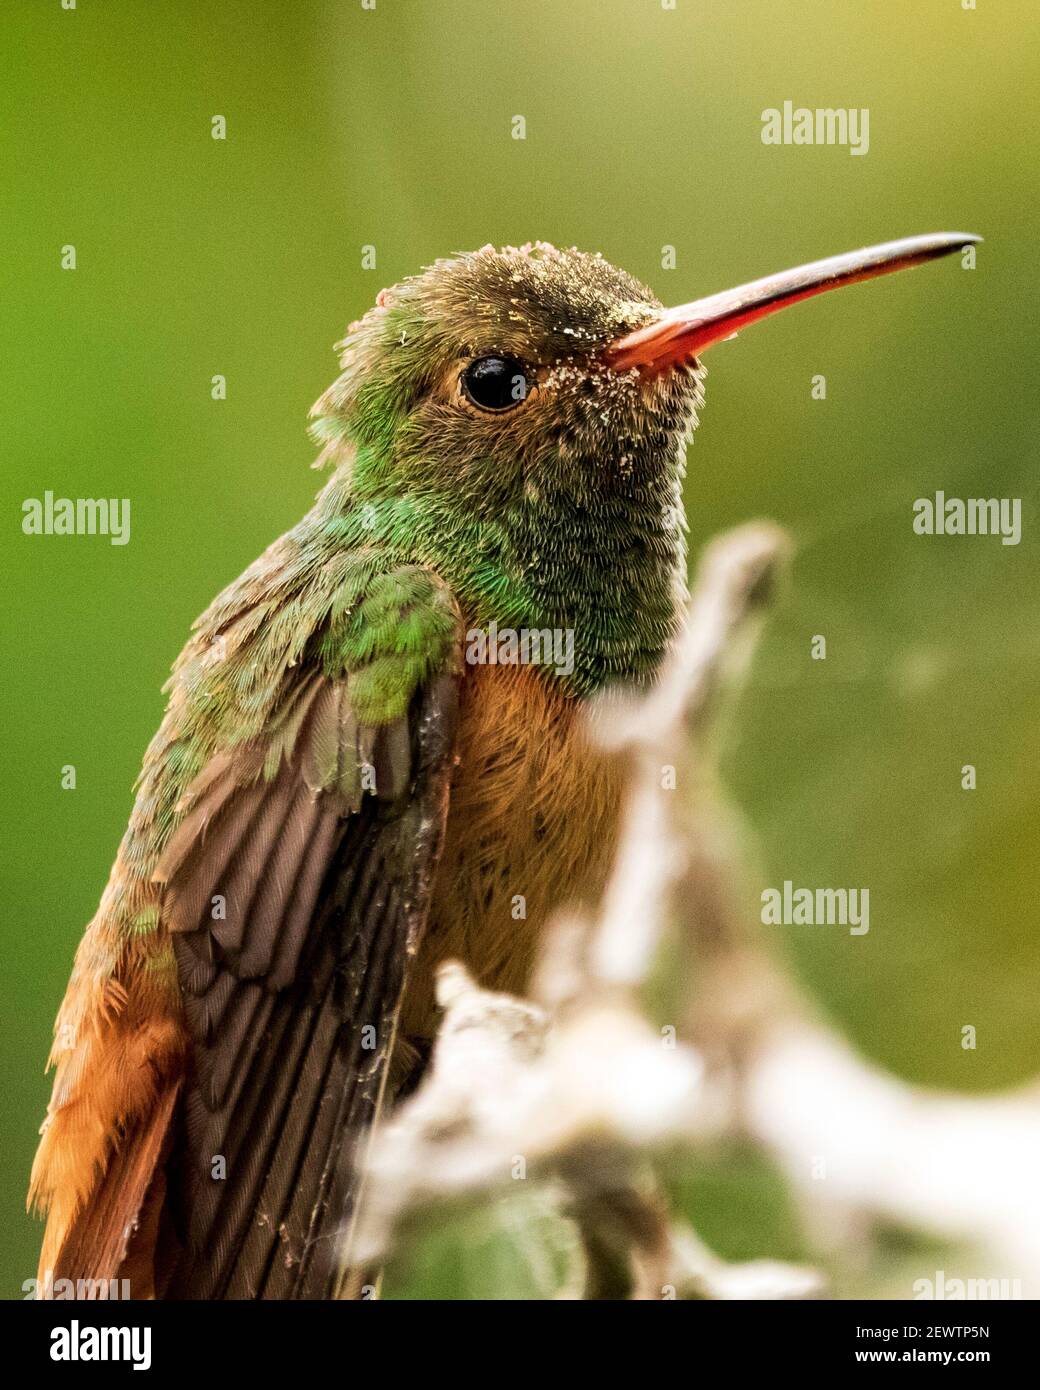 Yucatecan Hummingbird posing for the camera Stock Photo